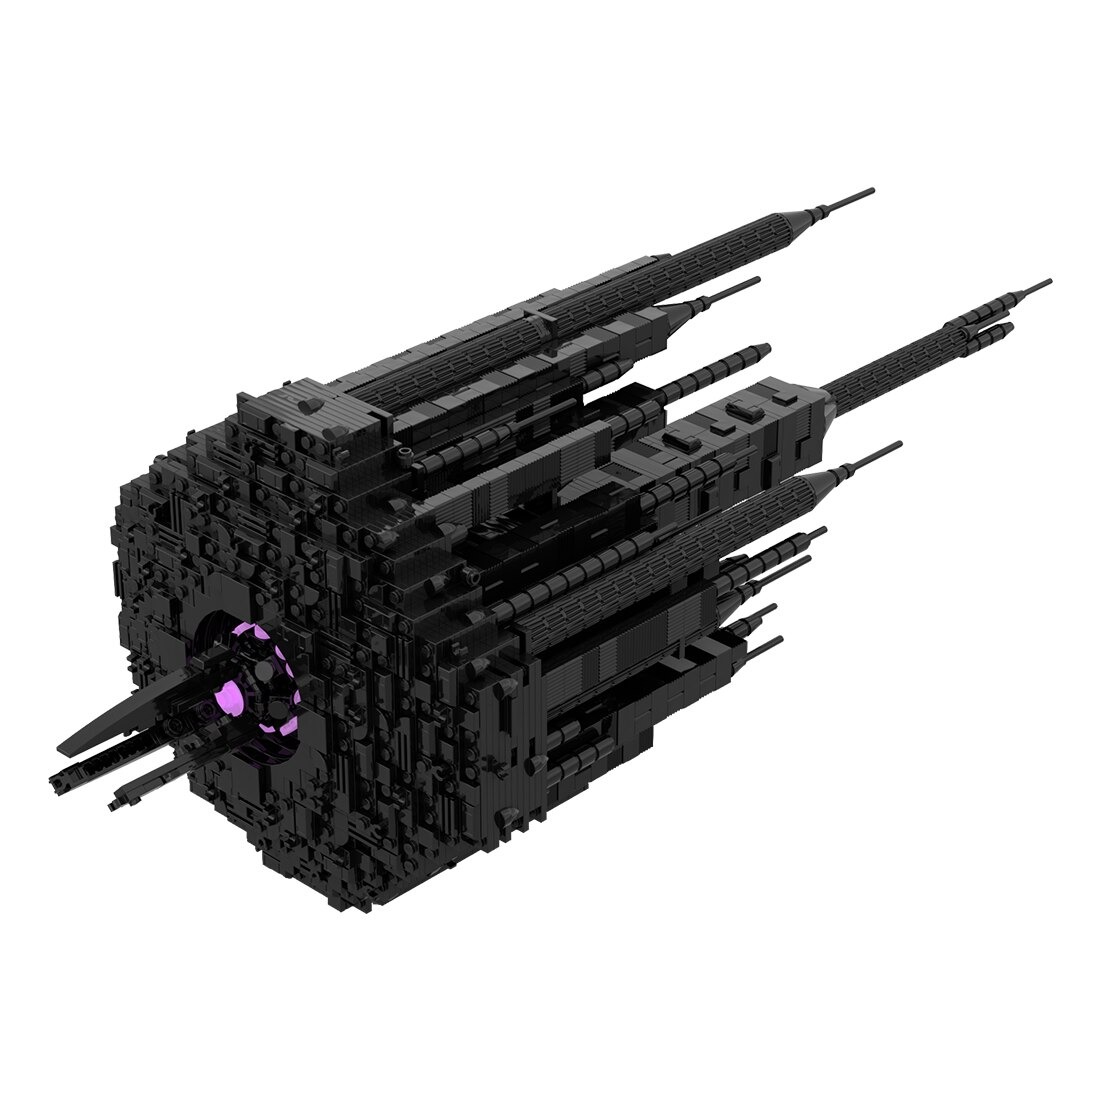 moc 125965 replicator cruiser space wars main 0